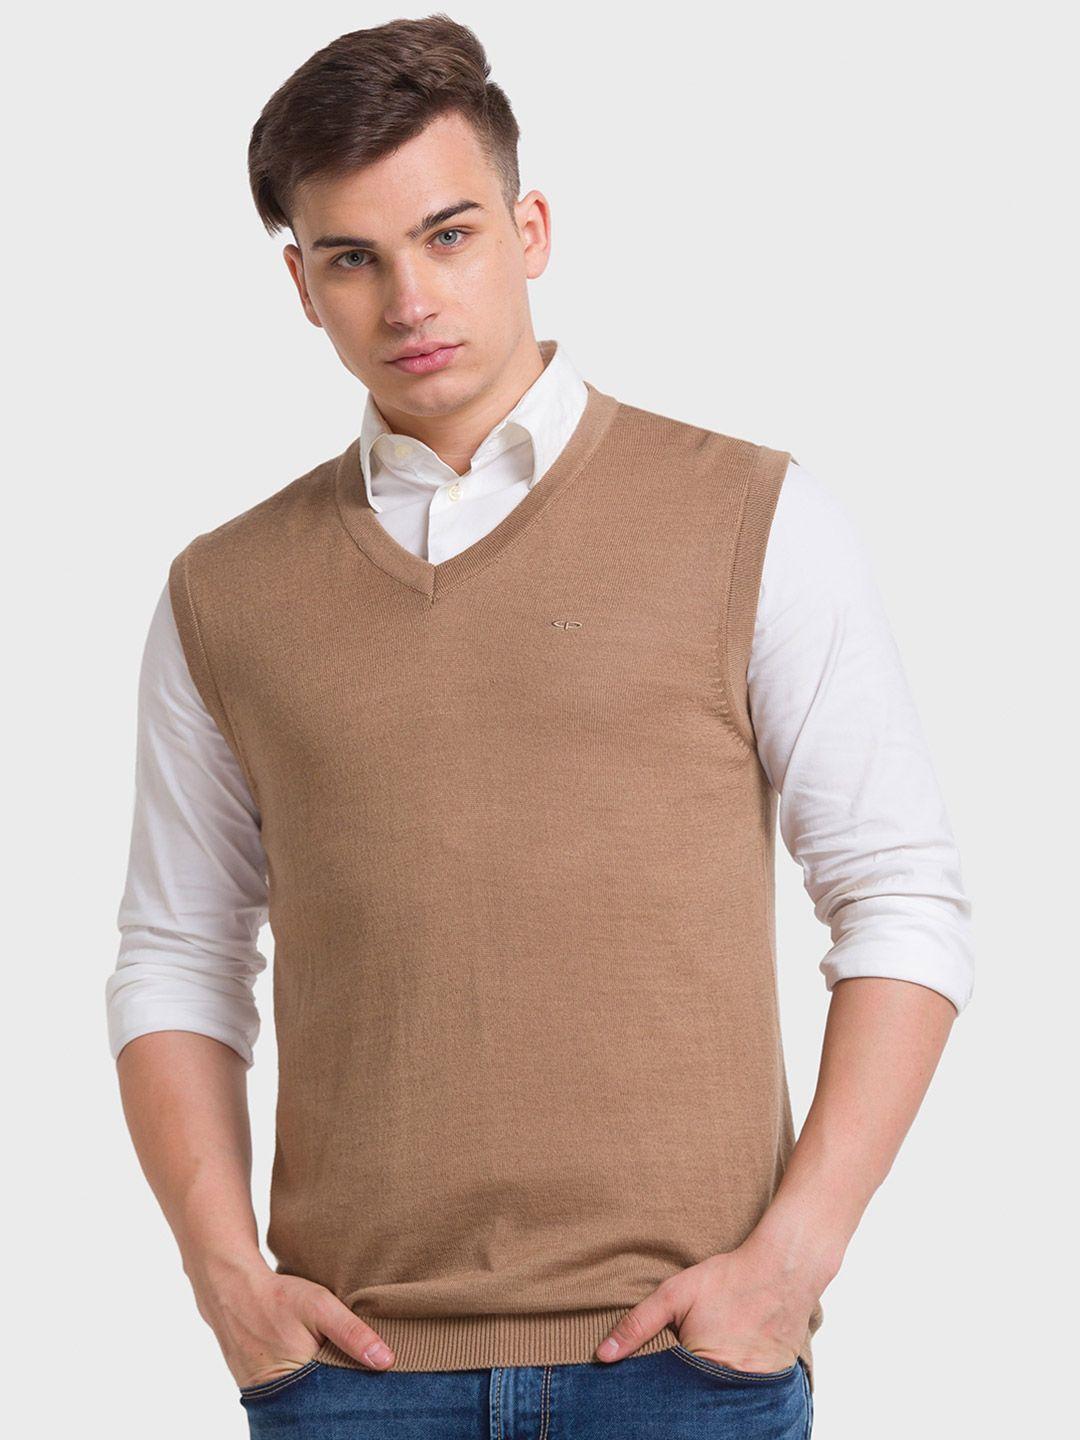 colorplus-men-plus-size-v-neck-sleeveless-sweater